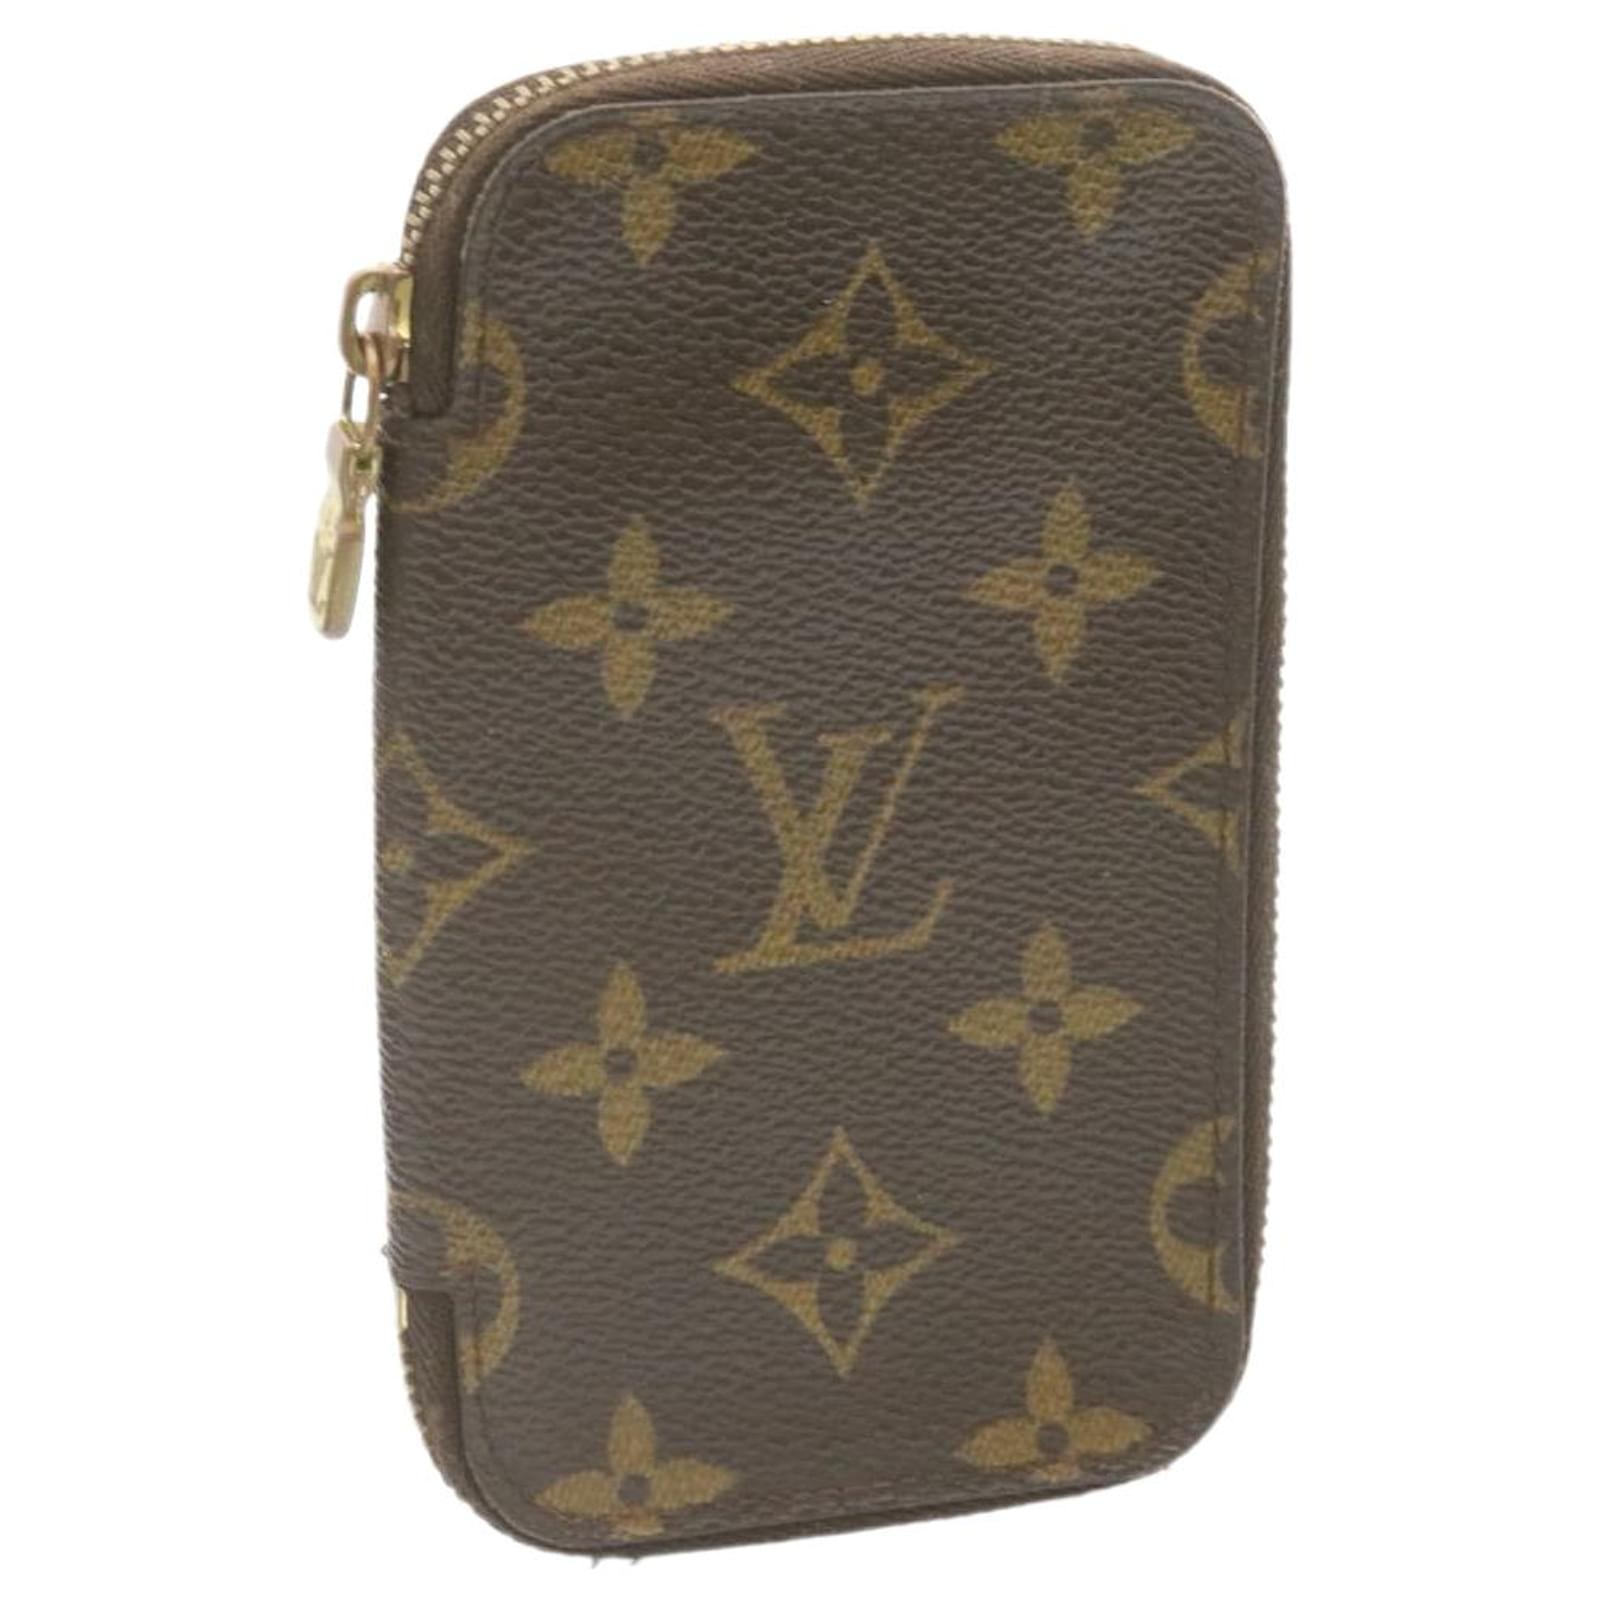 LV 6 Key Holder  Louis vuitton key pouch, Key holder, Handbag